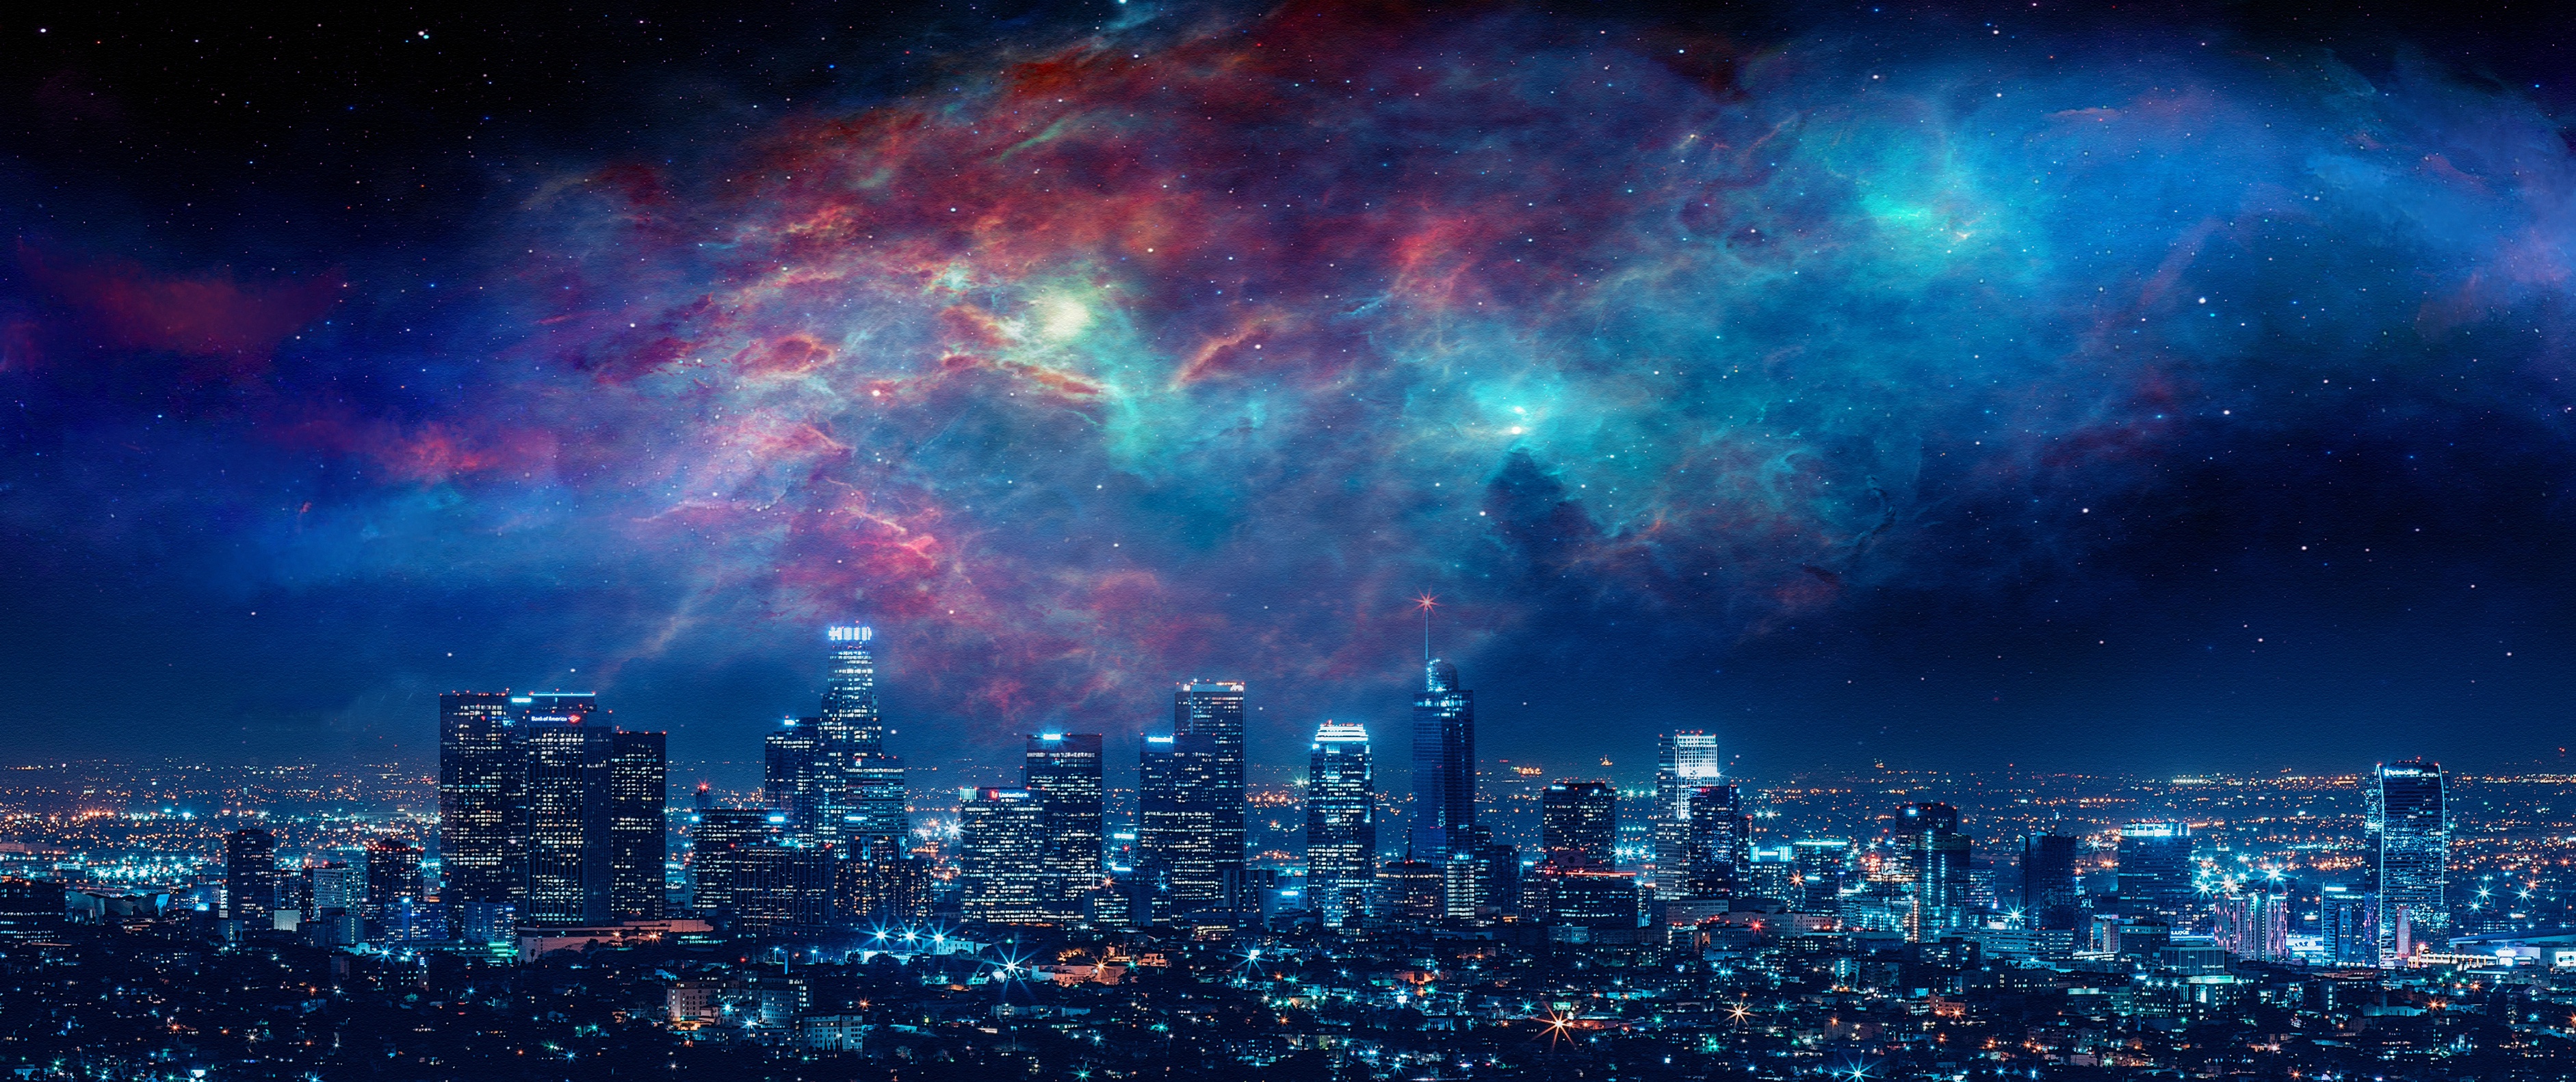 Wallpaper Of Artistic, City, Los Angeles, Nebula, Night, - Night Sky Background City - HD Wallpaper 